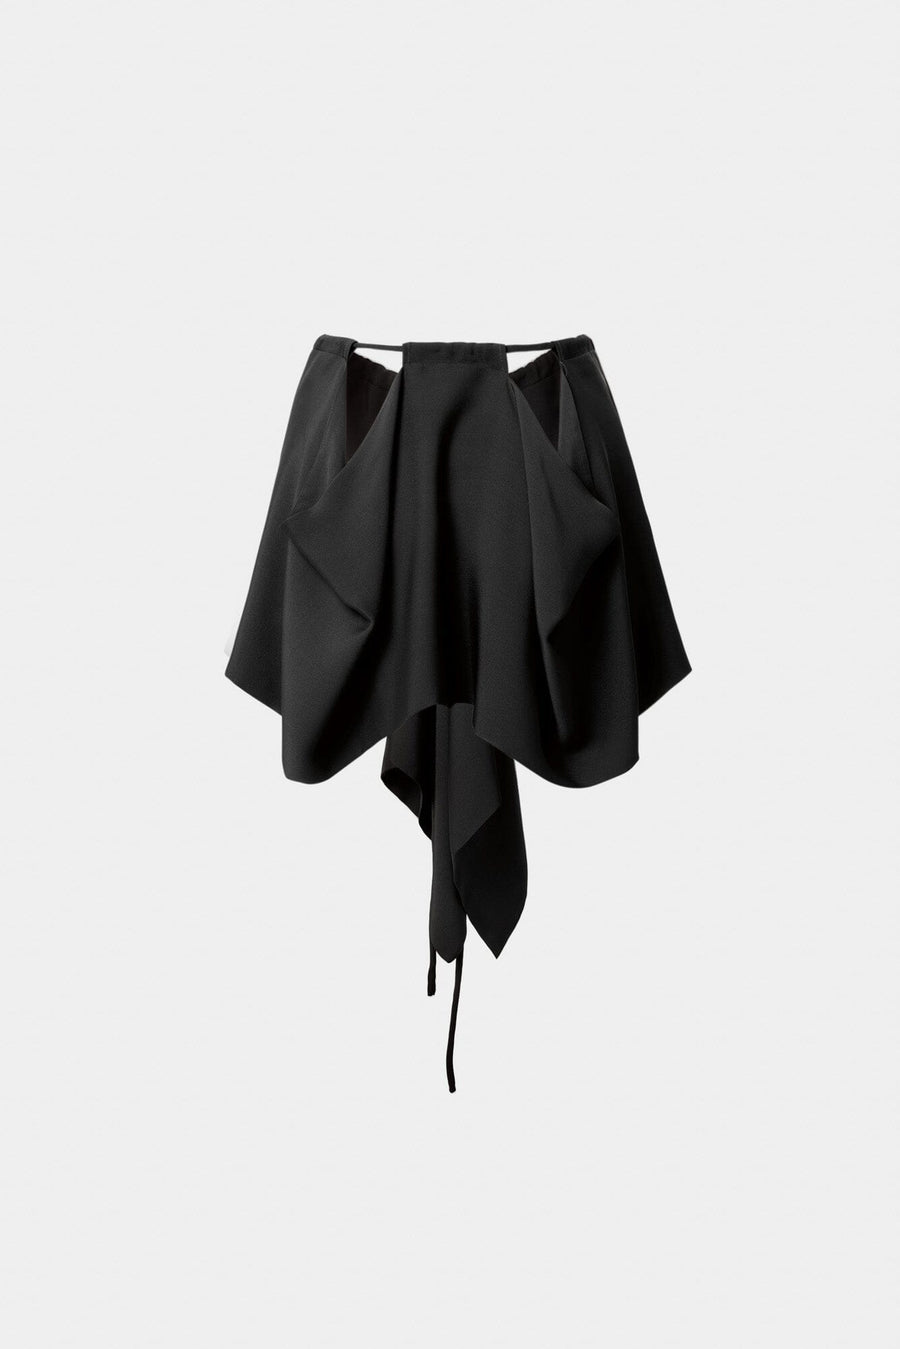 Drawstring Scarf/Overskirt/Top Black